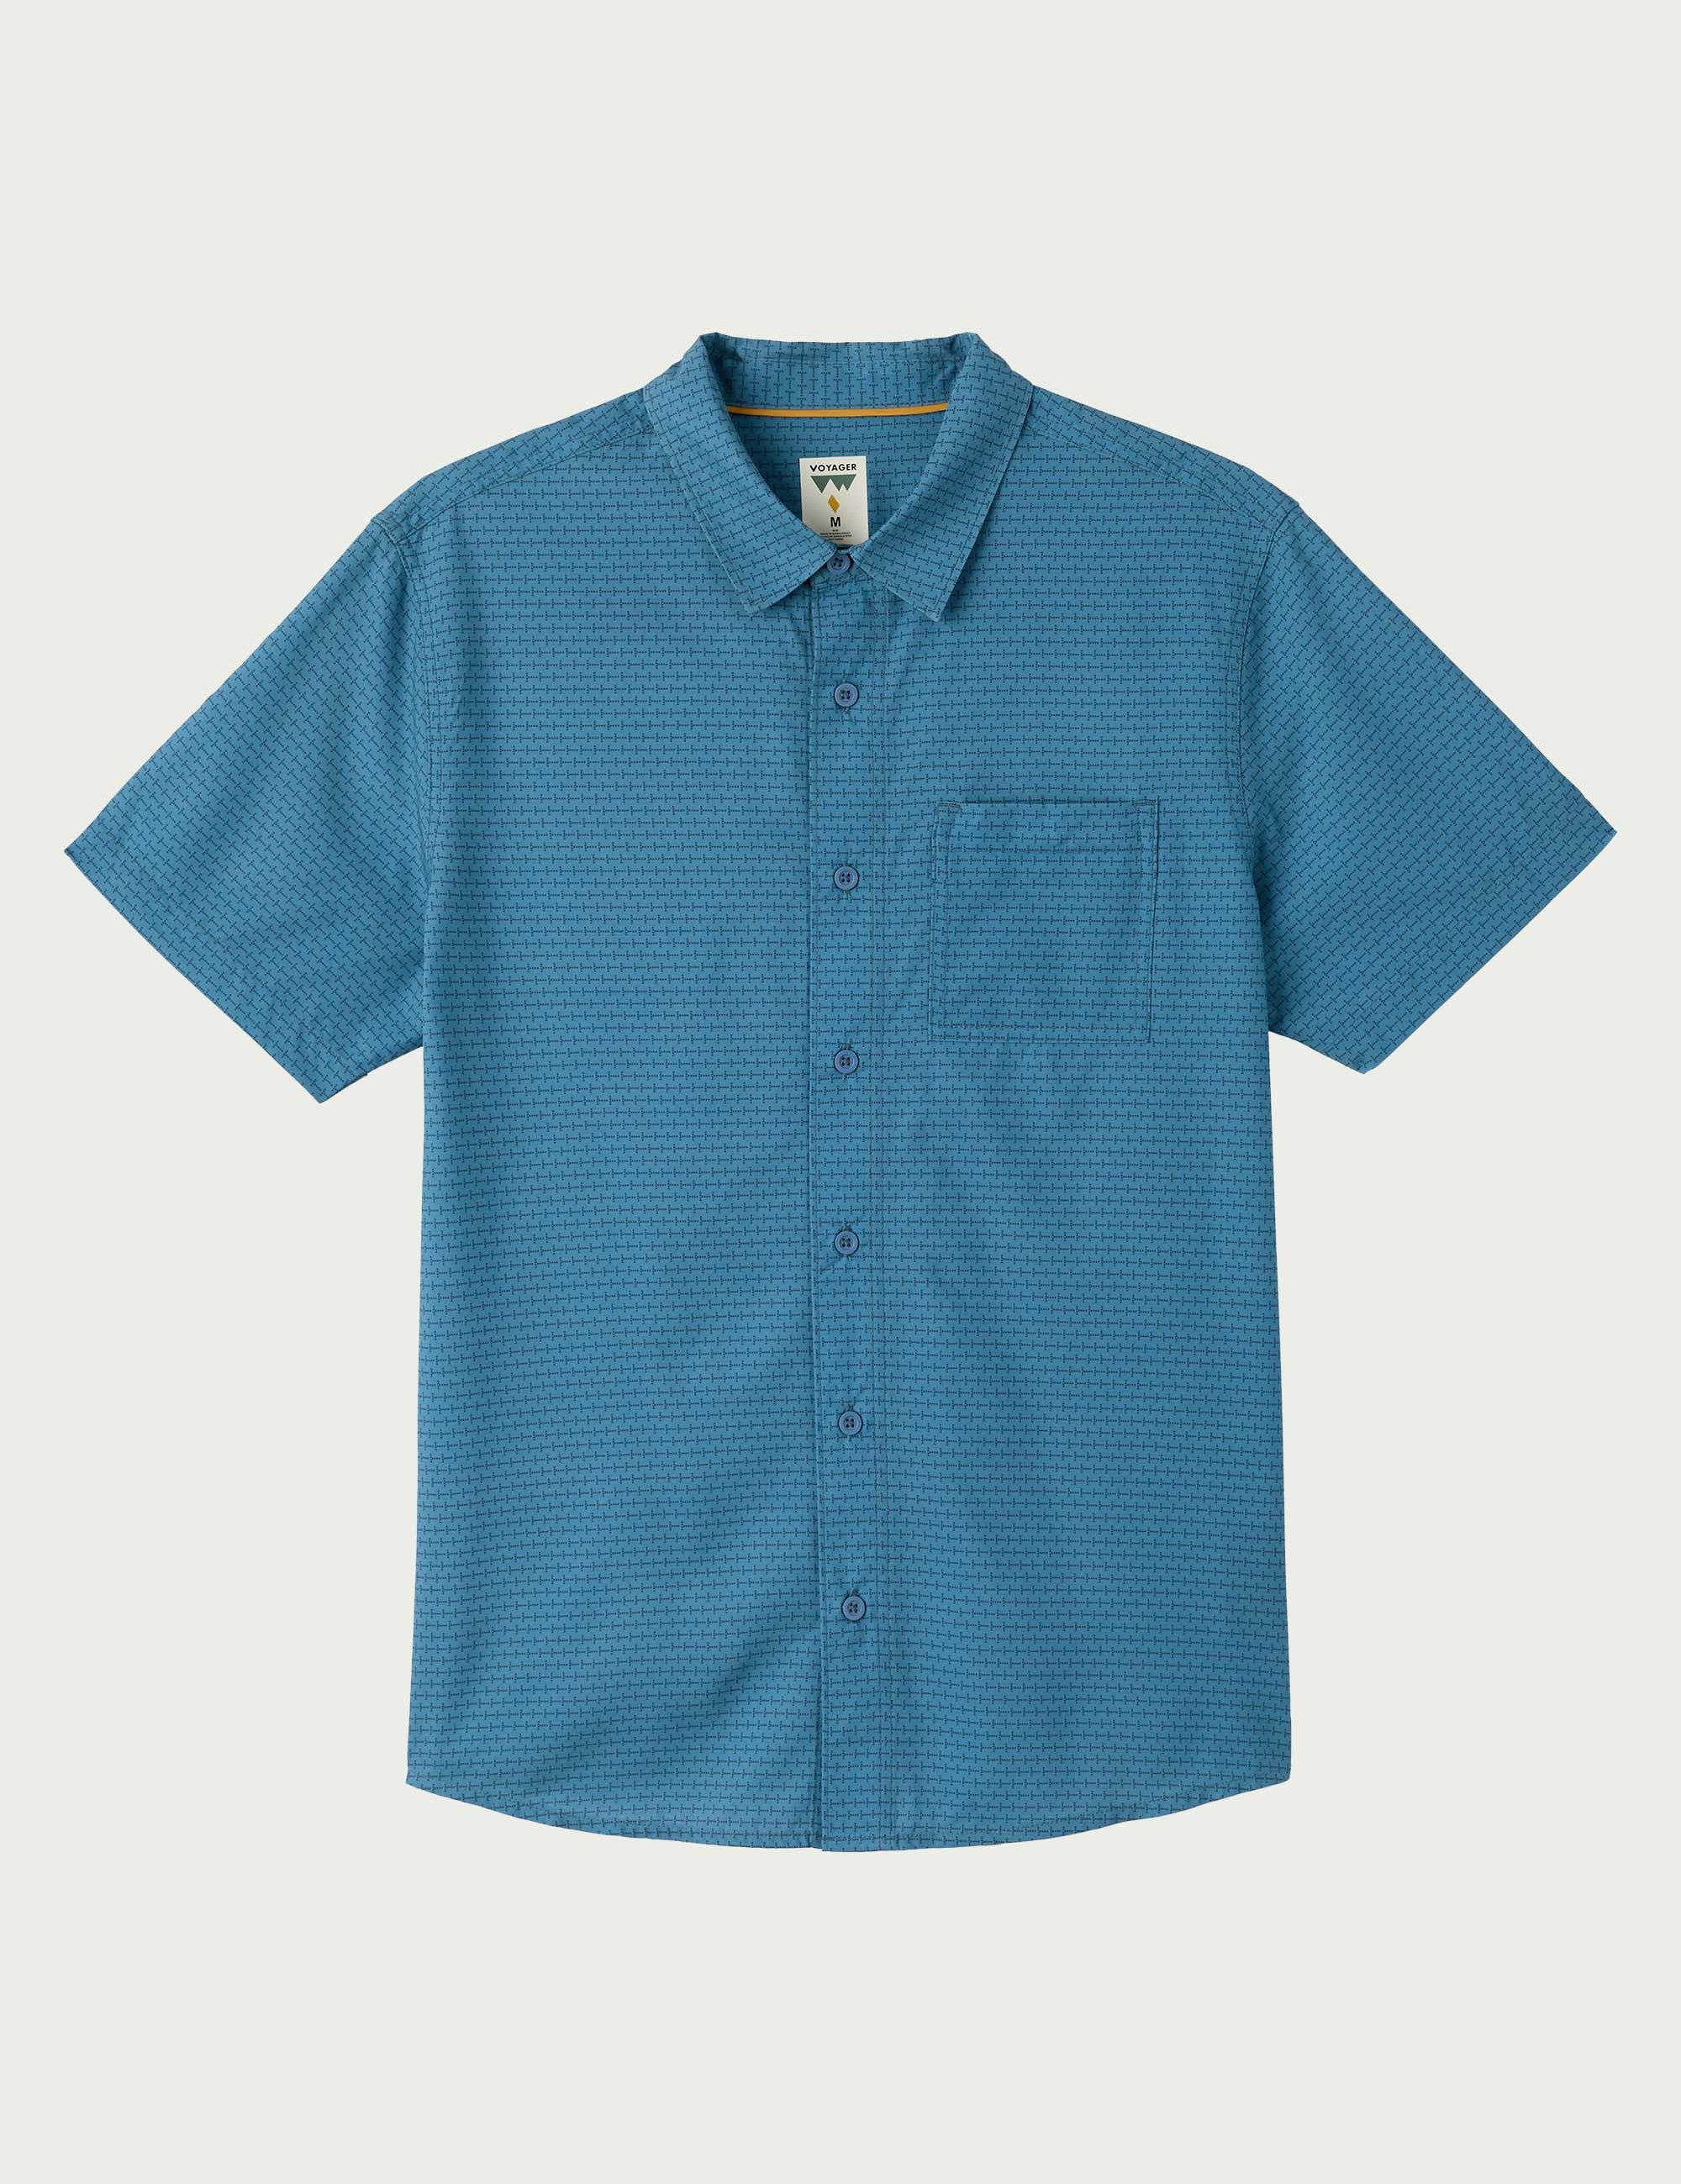 Men's Shirts - Button Ups & Flannels | Voyager Goods